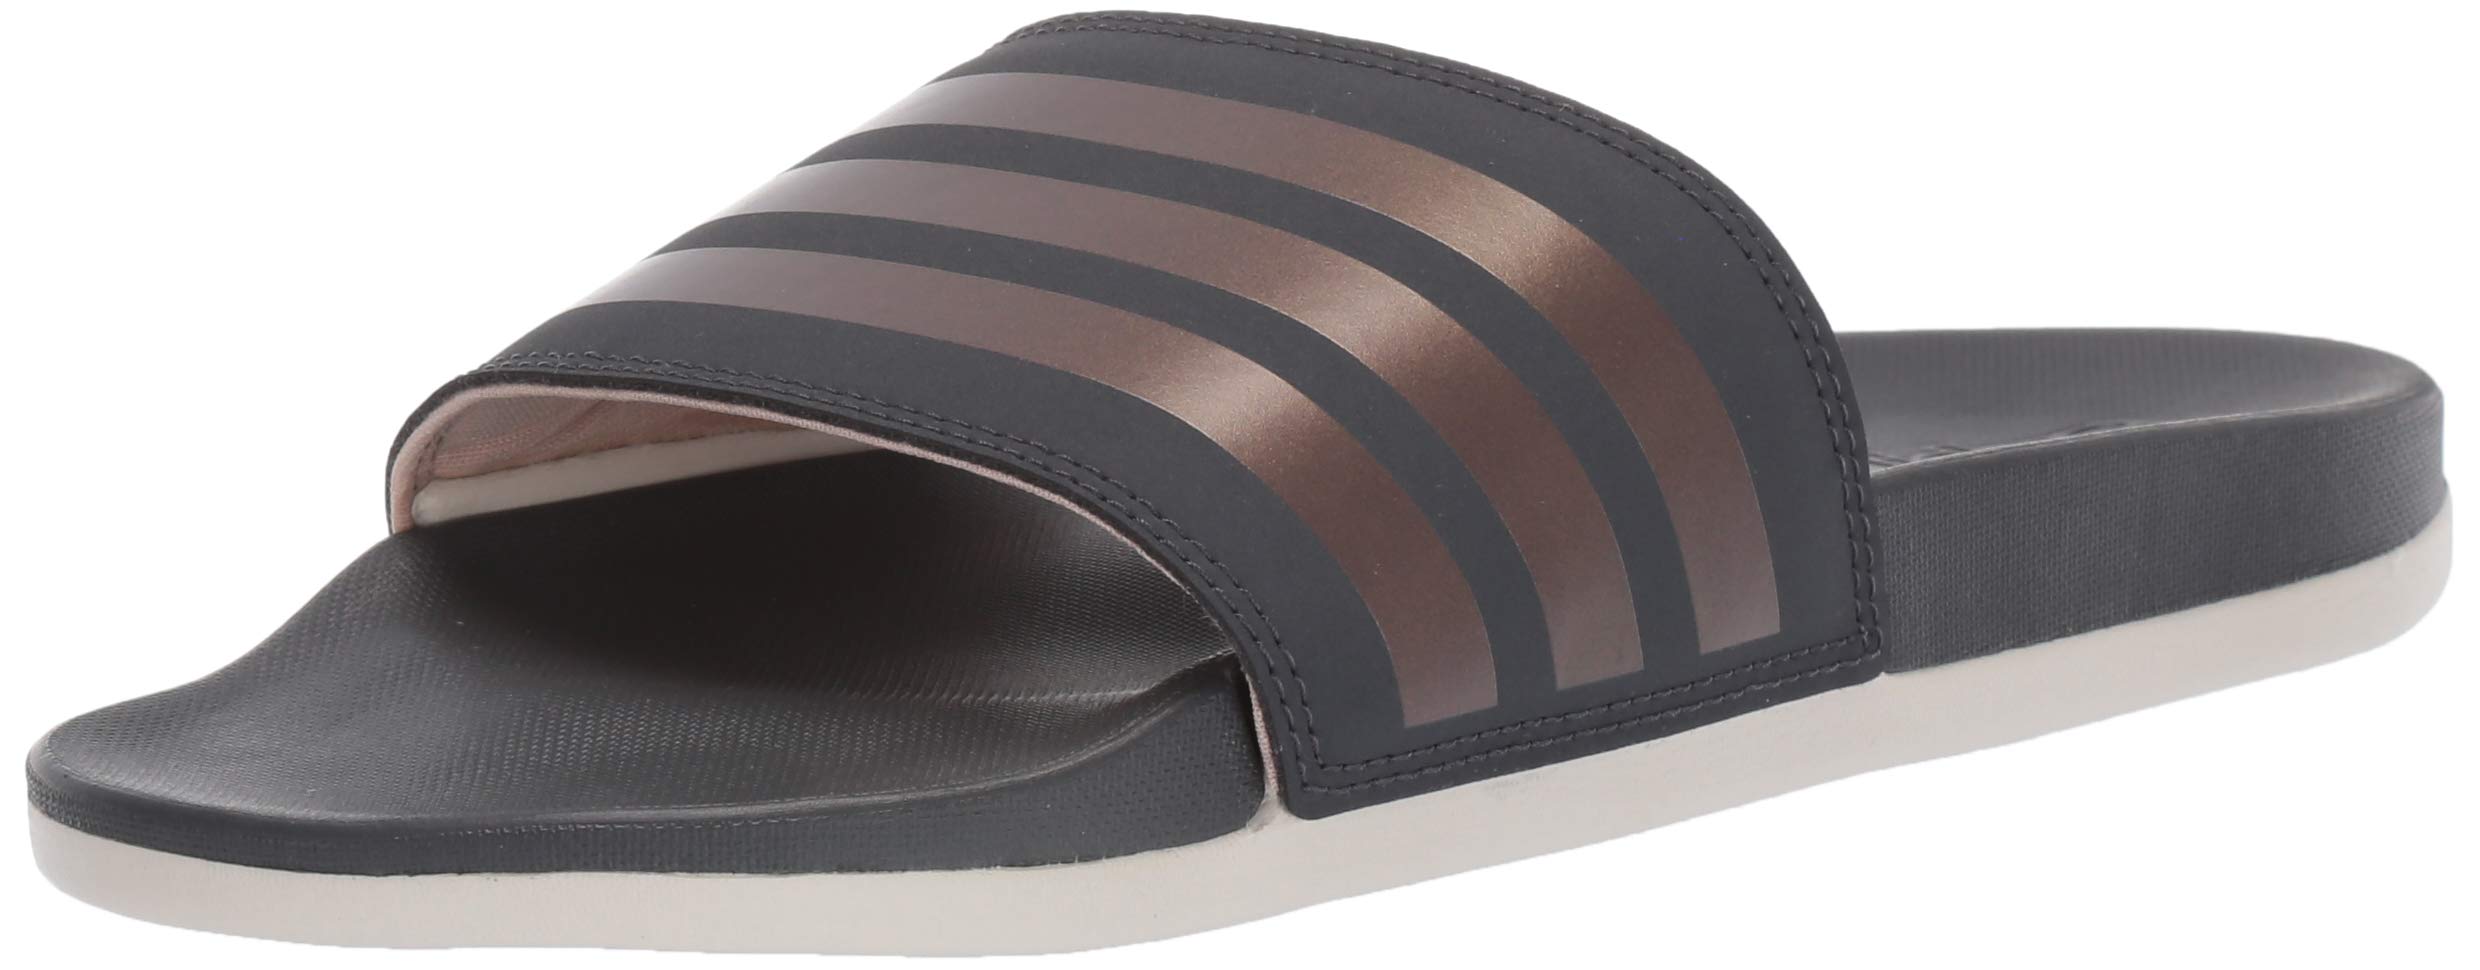 adidas Women's Adilette Comfort Slides, Grey/Copper Metallic/Raw White, 8